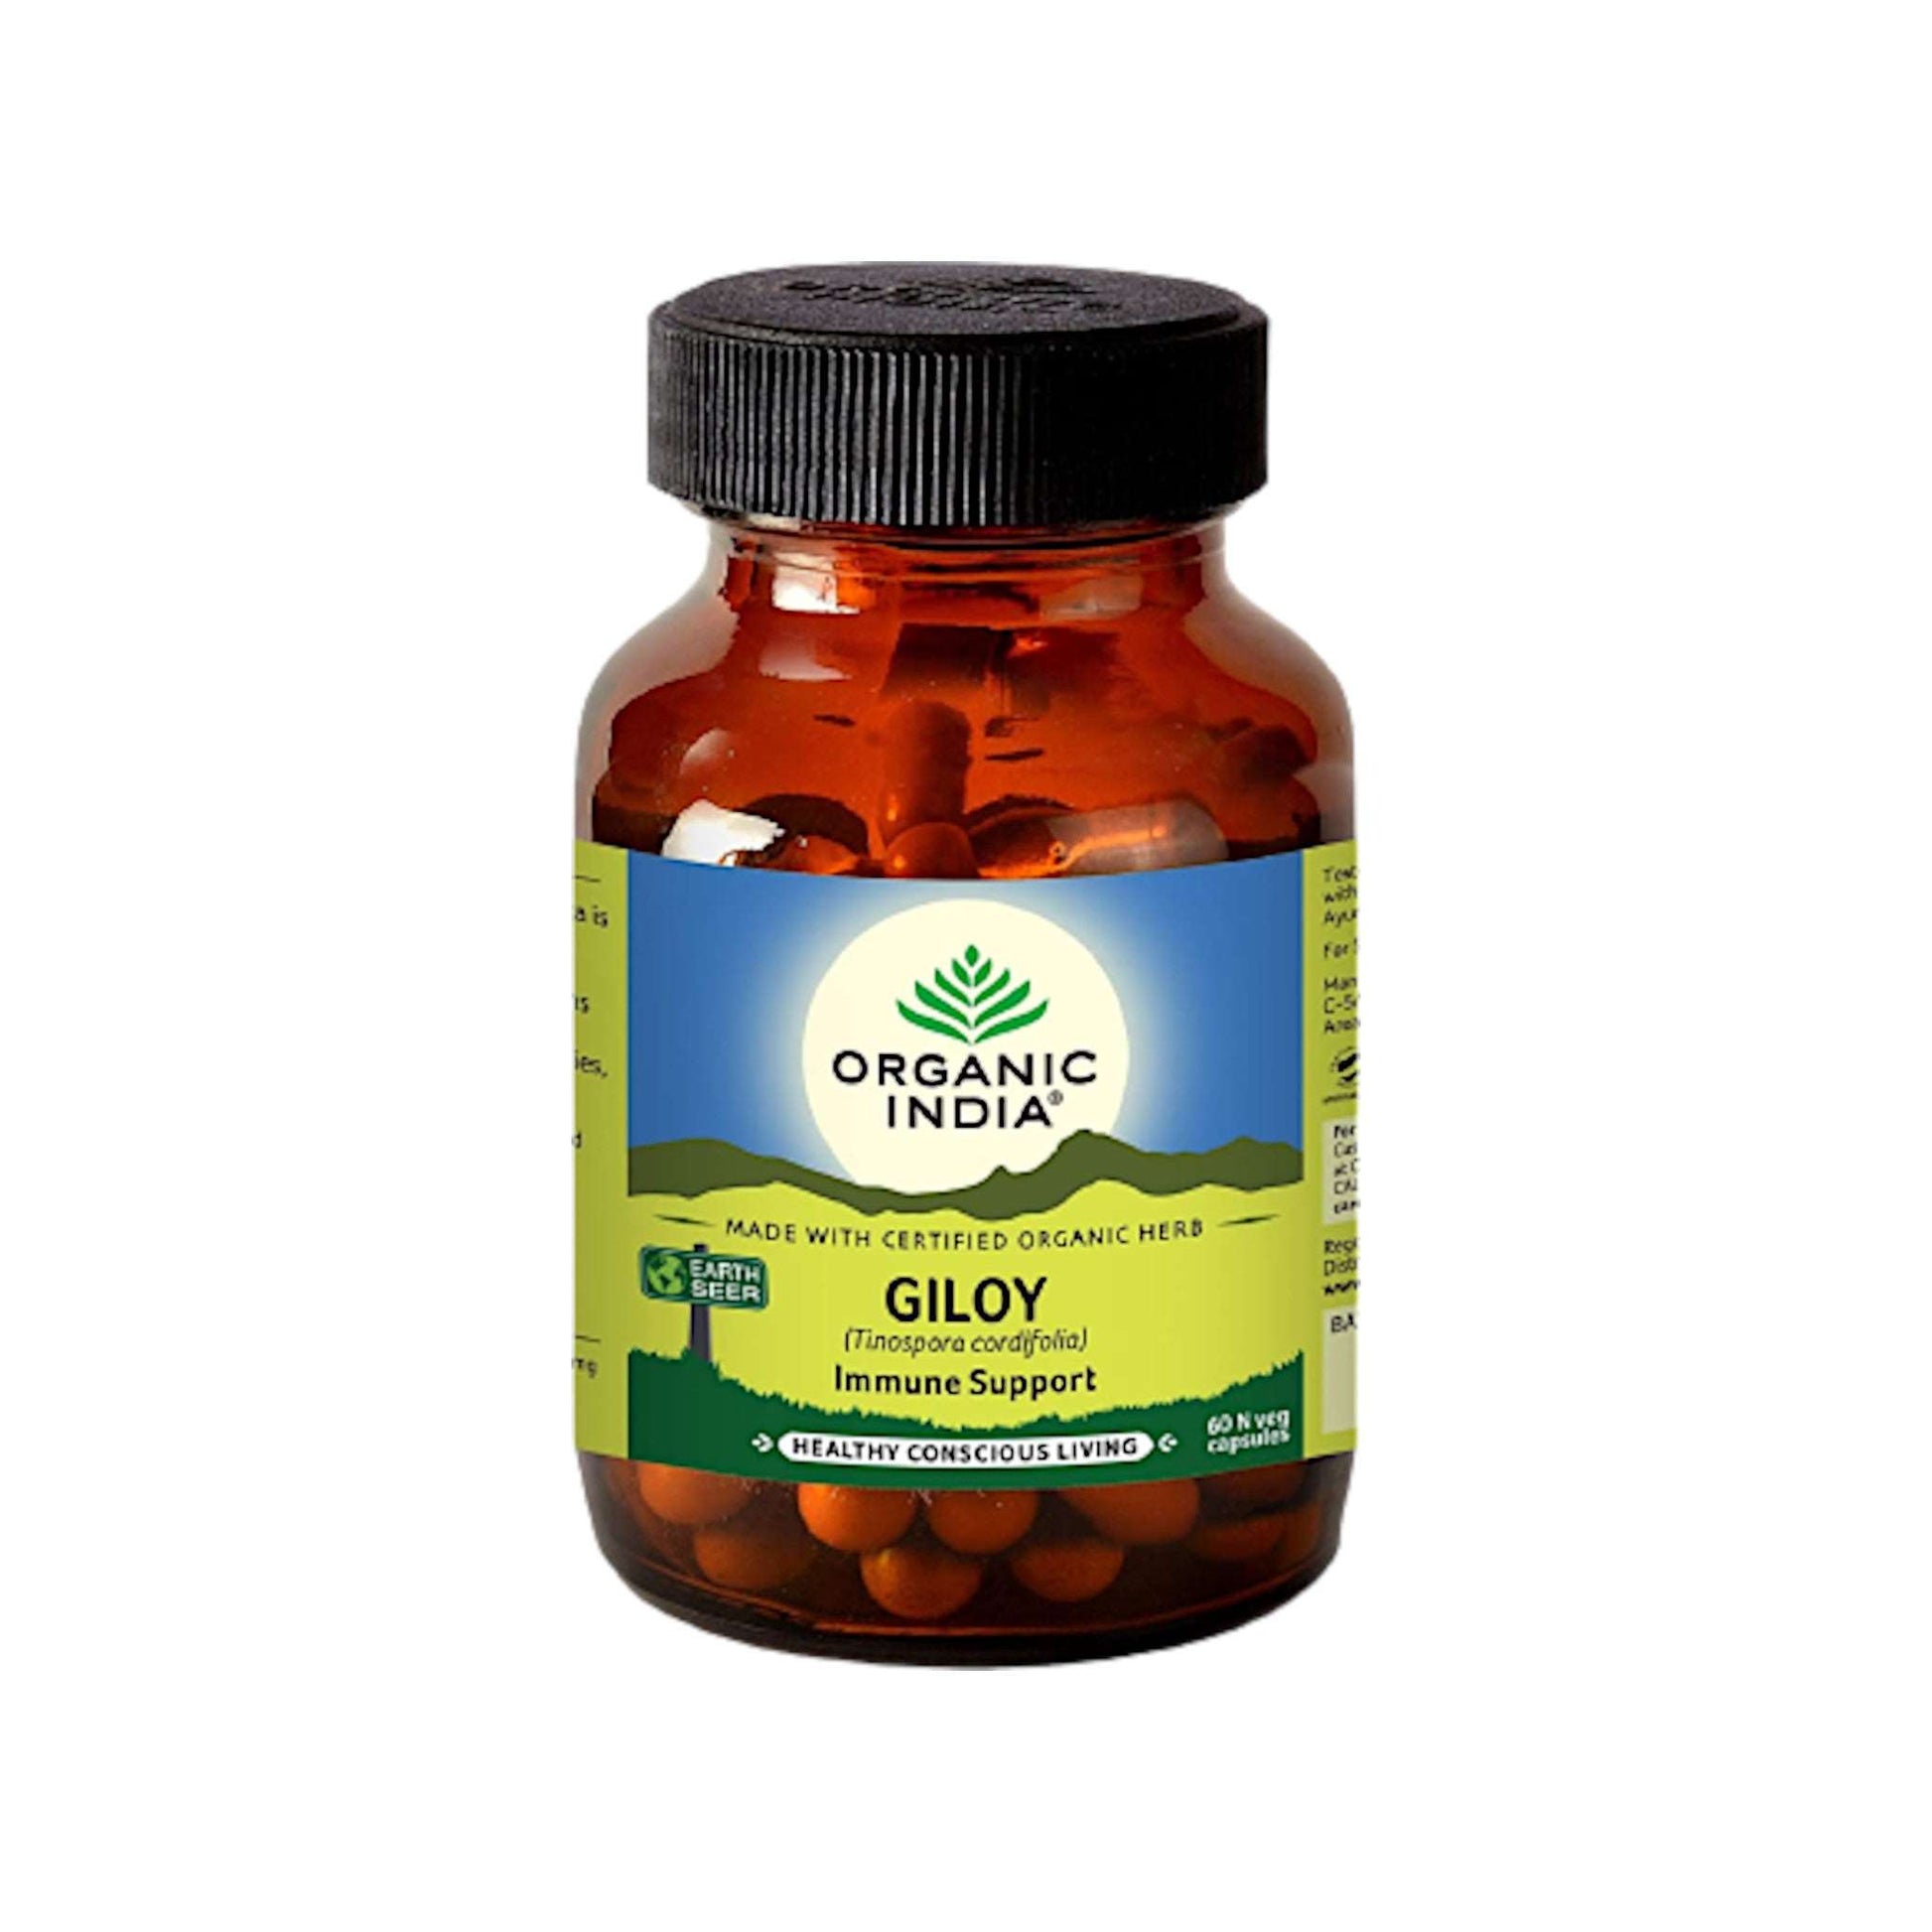 Image: Organic India Giloy Immune Support 60 Capsules - Ayurvedic immune booster with antioxidant and anti-inflammatory properties.